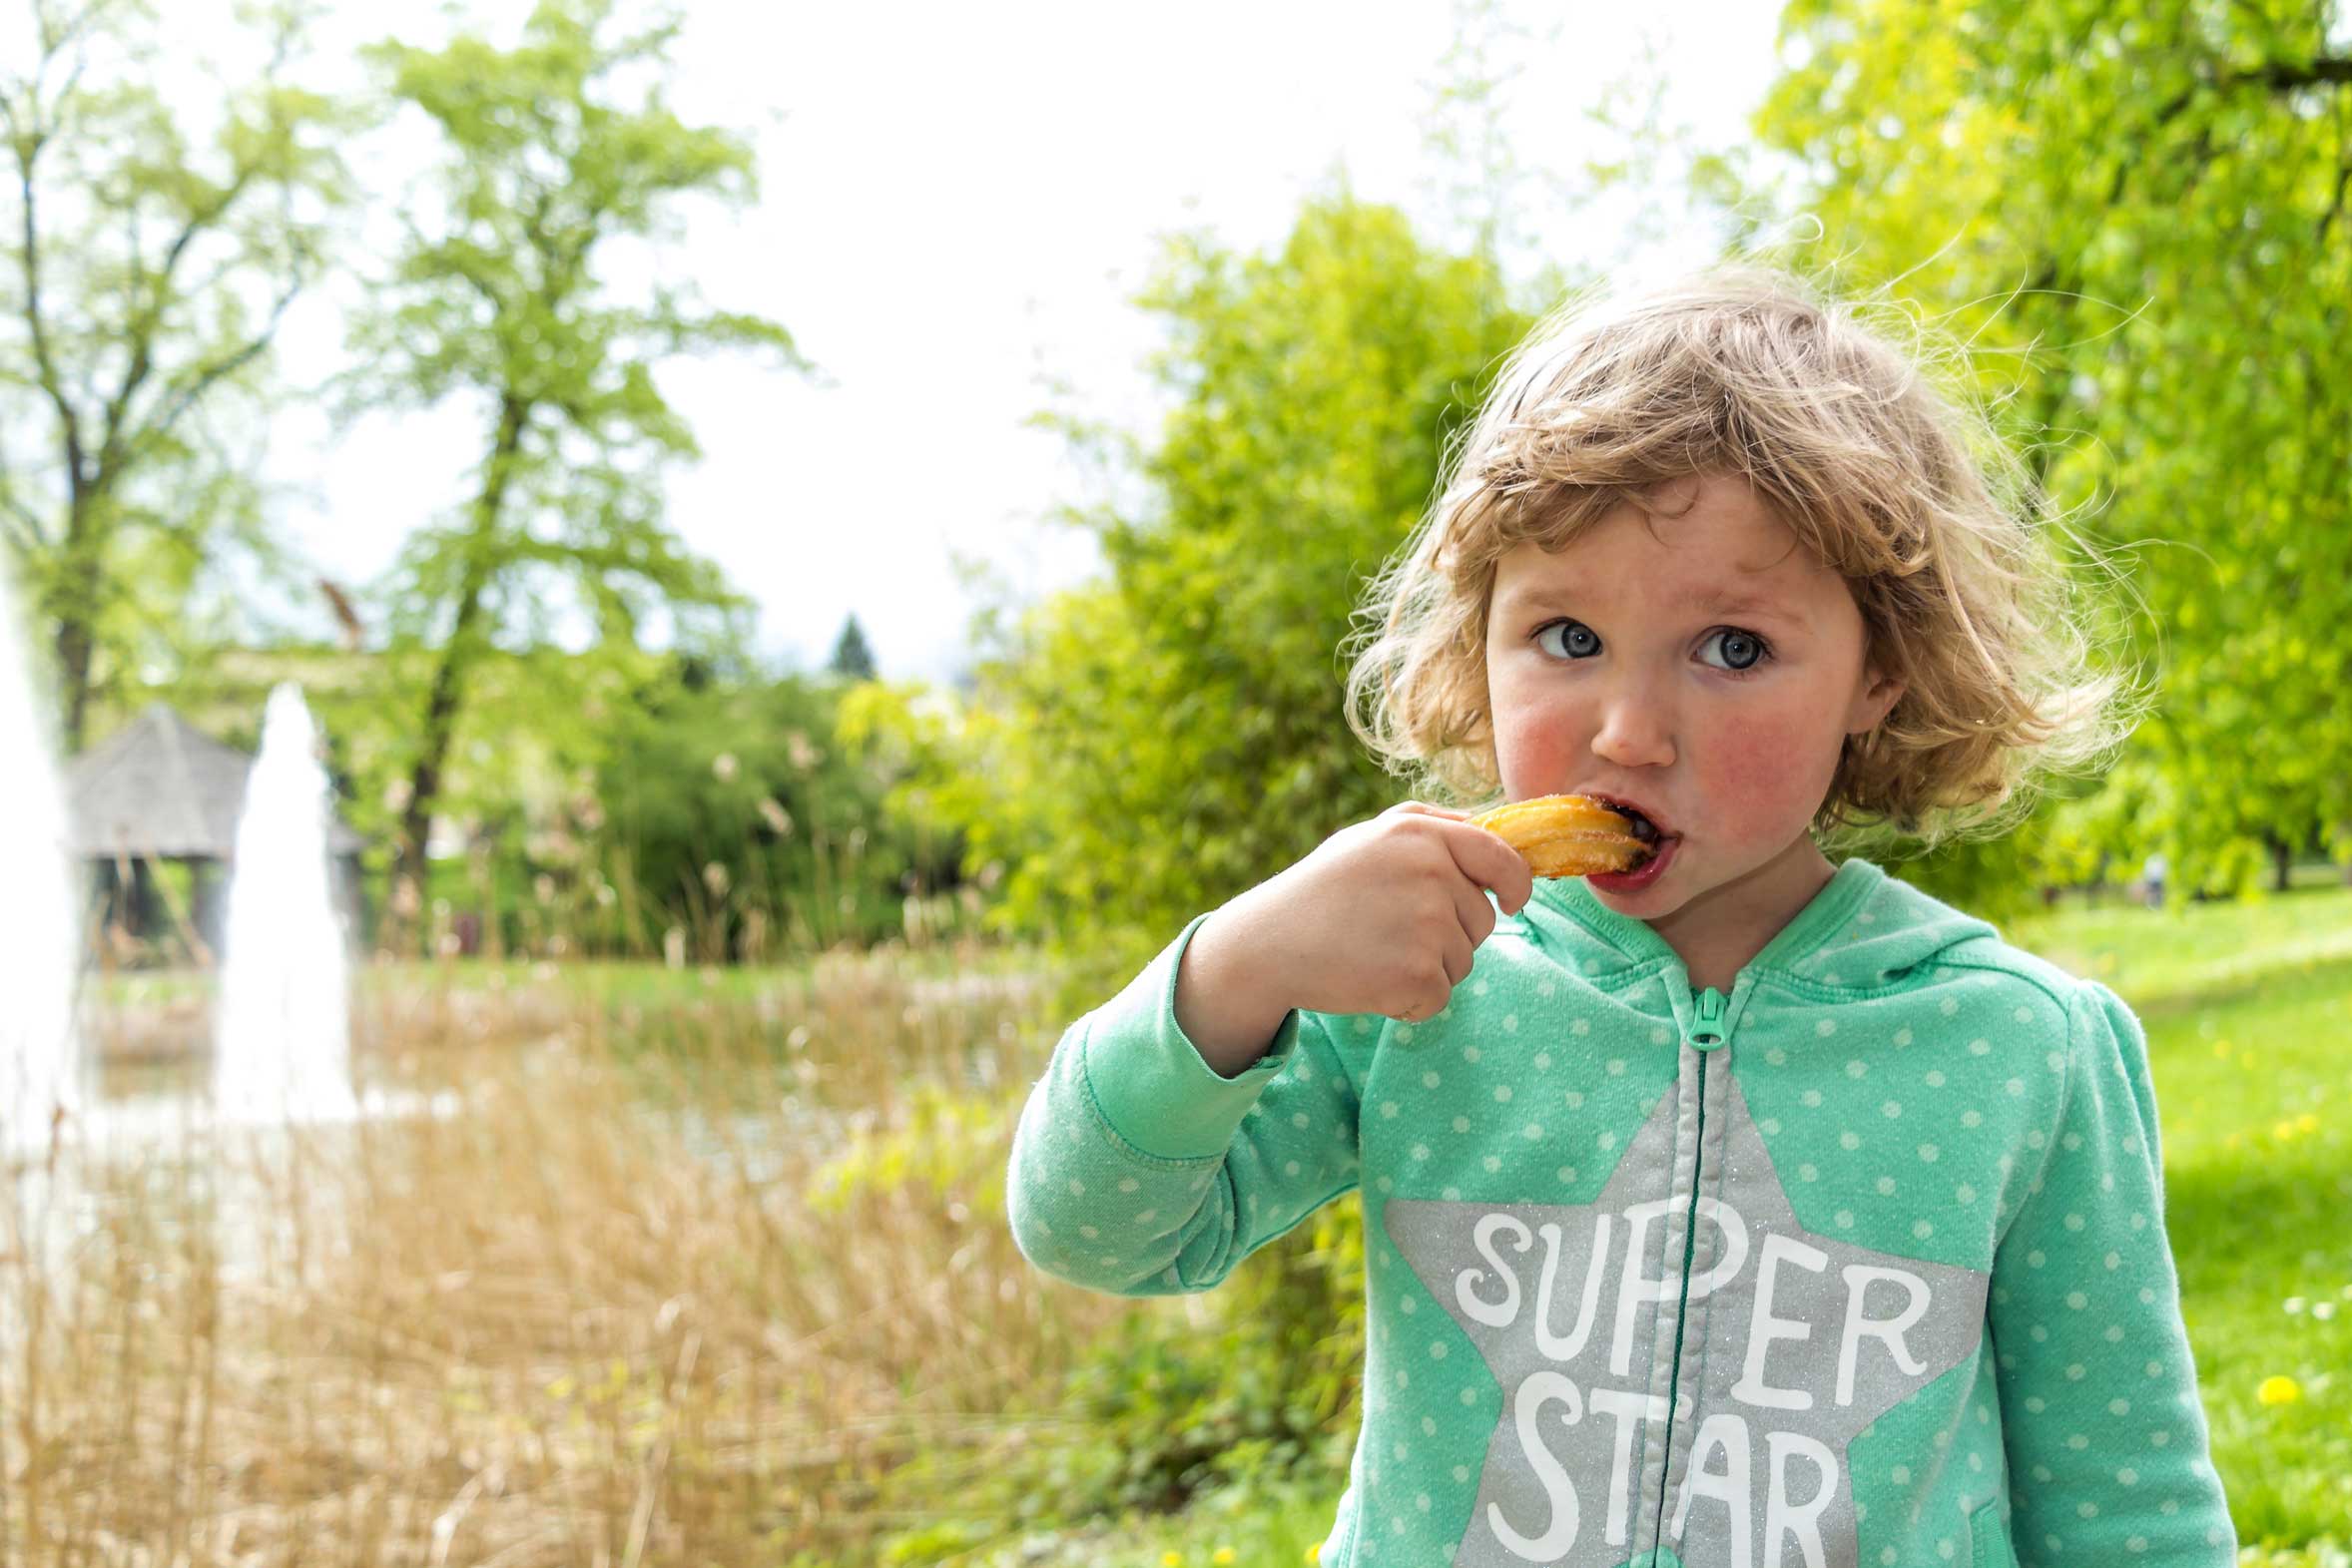 little girl eating a churro